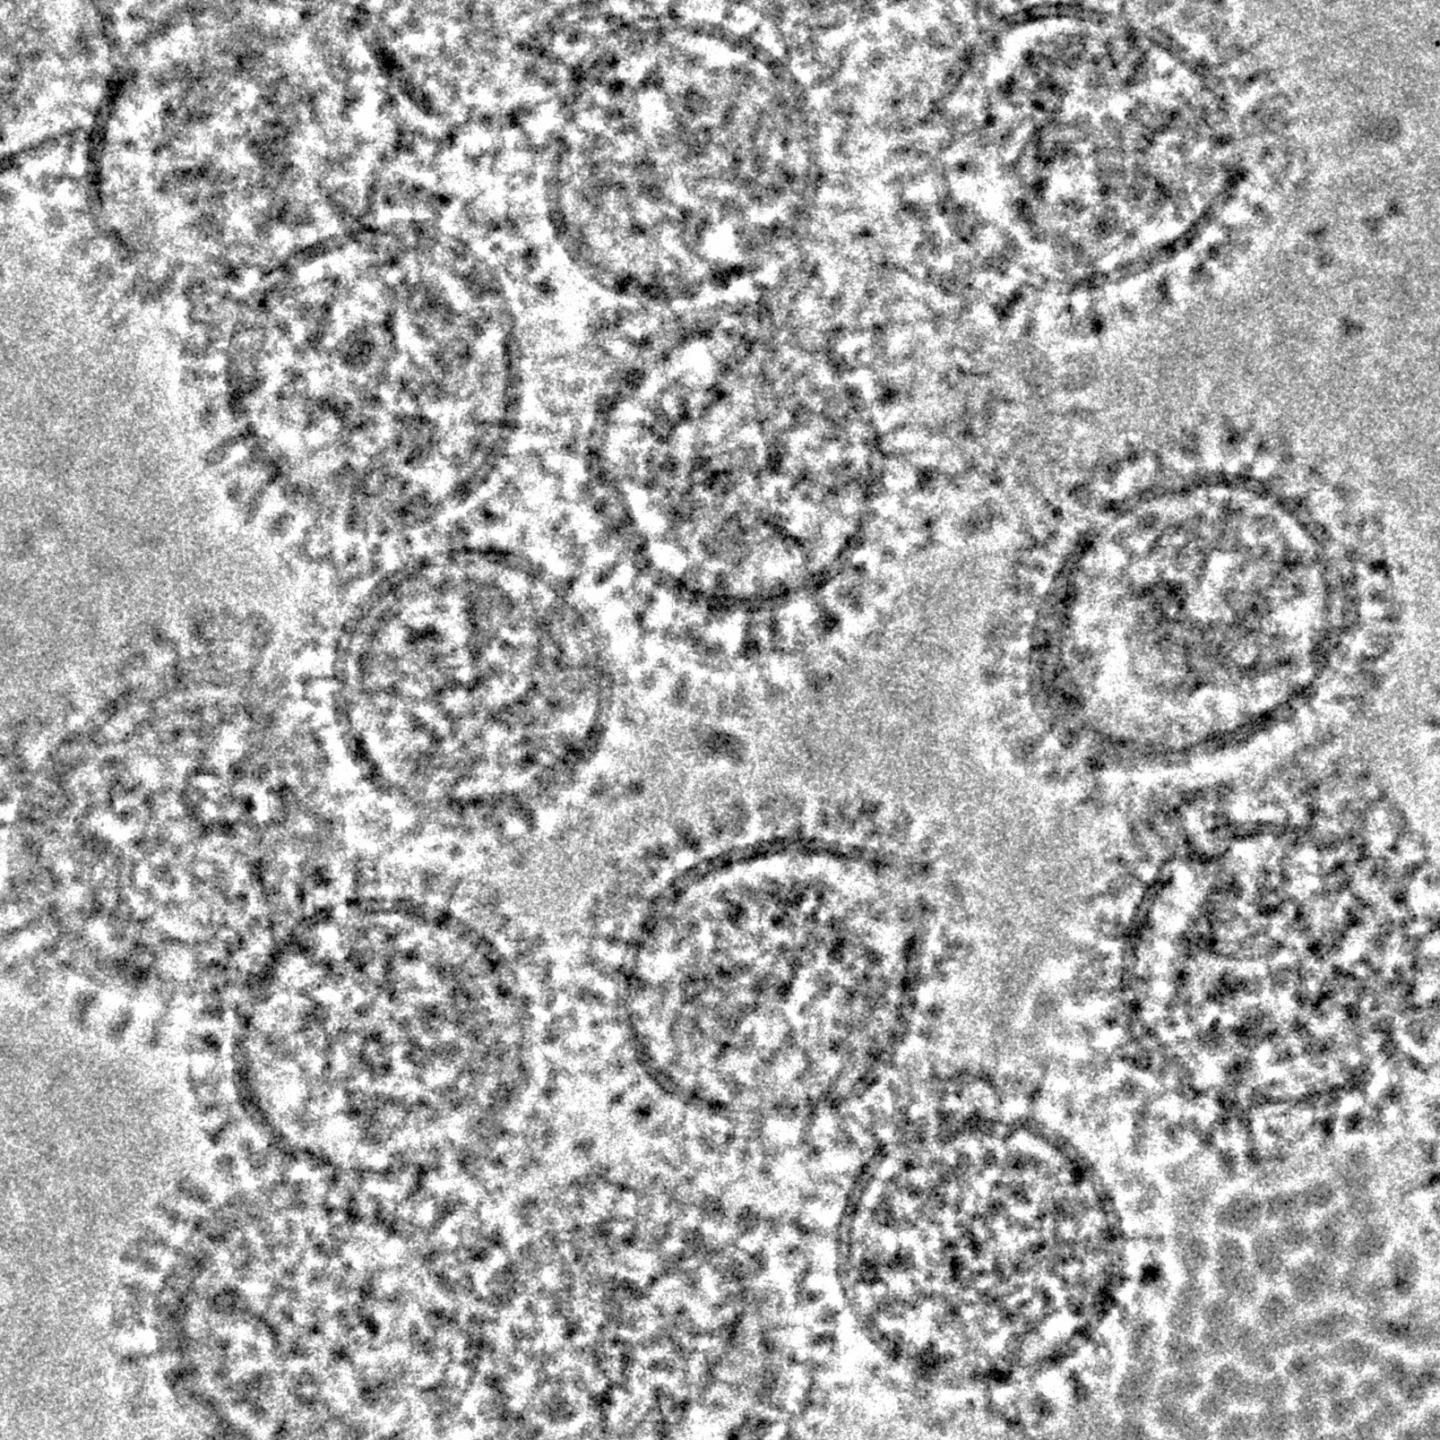 flu virus electron microscope